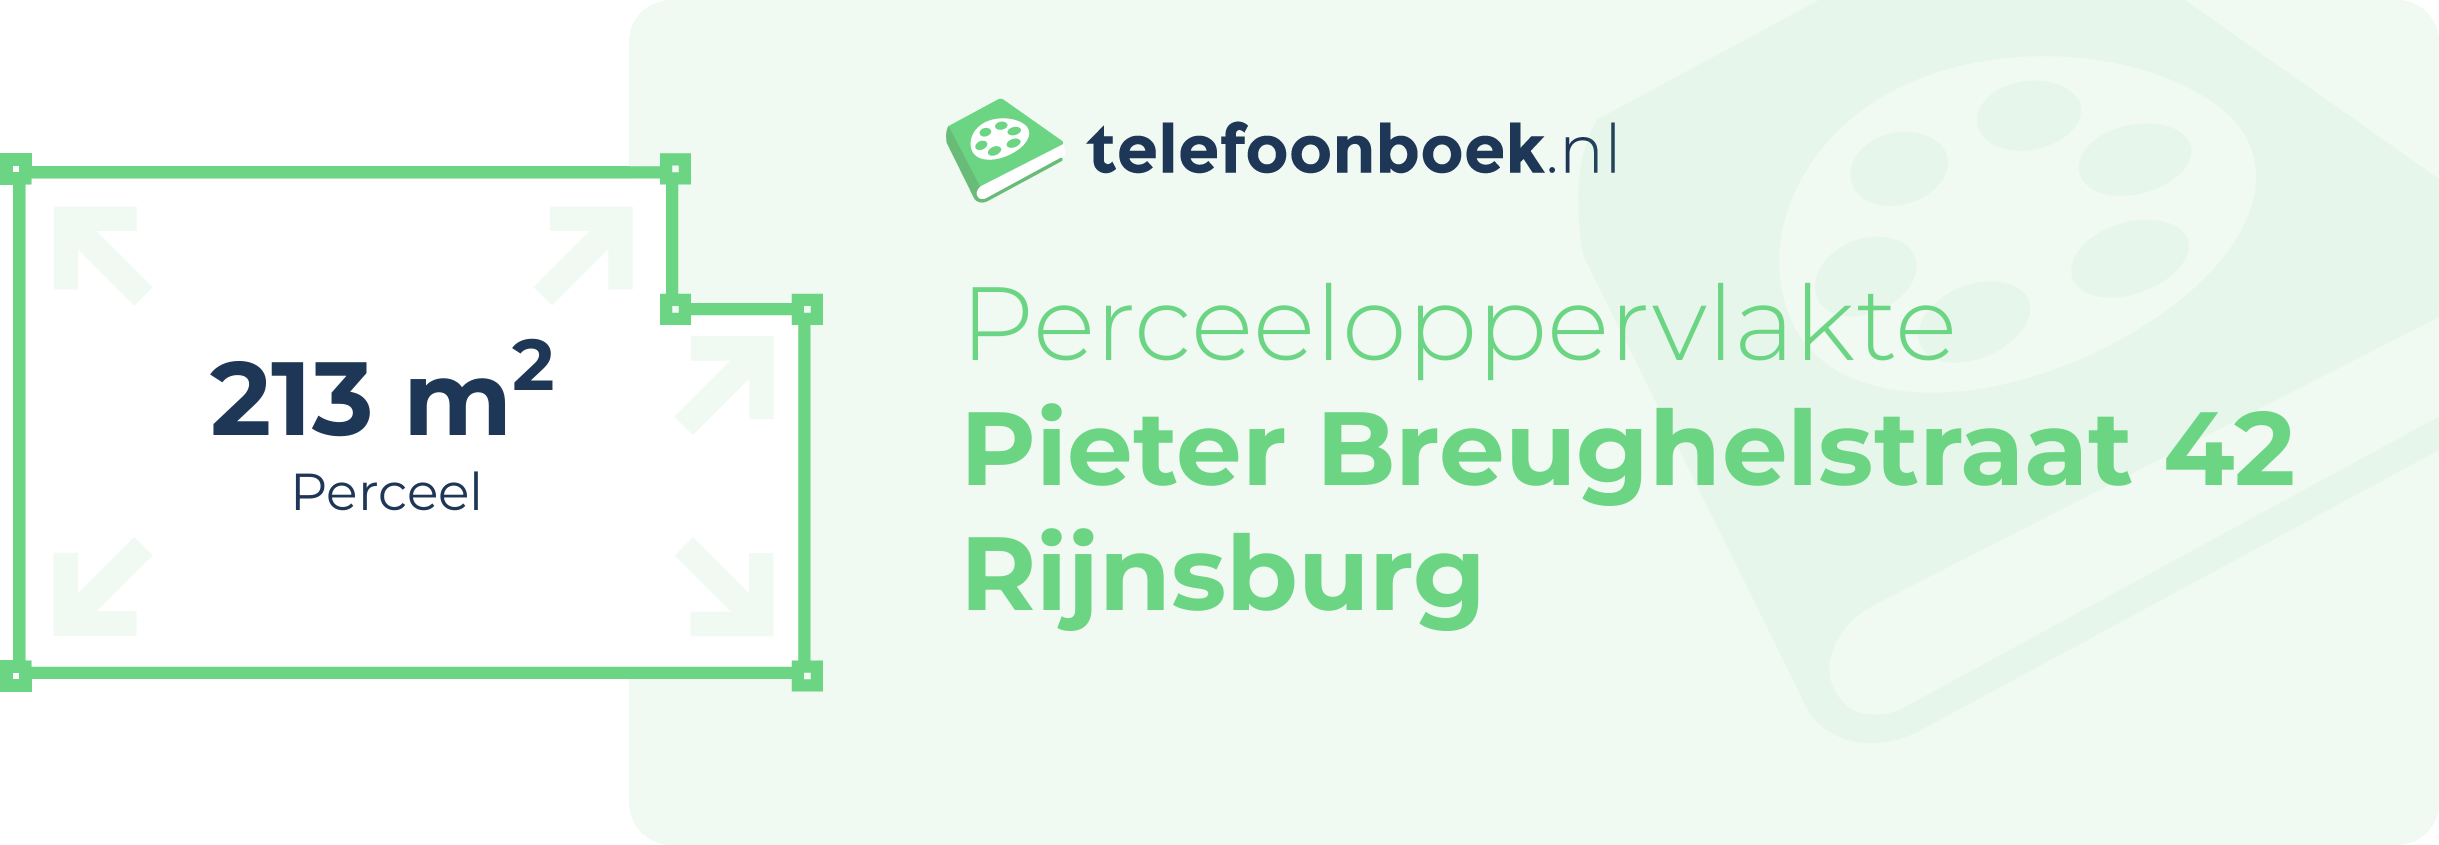 Perceeloppervlakte Pieter Breughelstraat 42 Rijnsburg